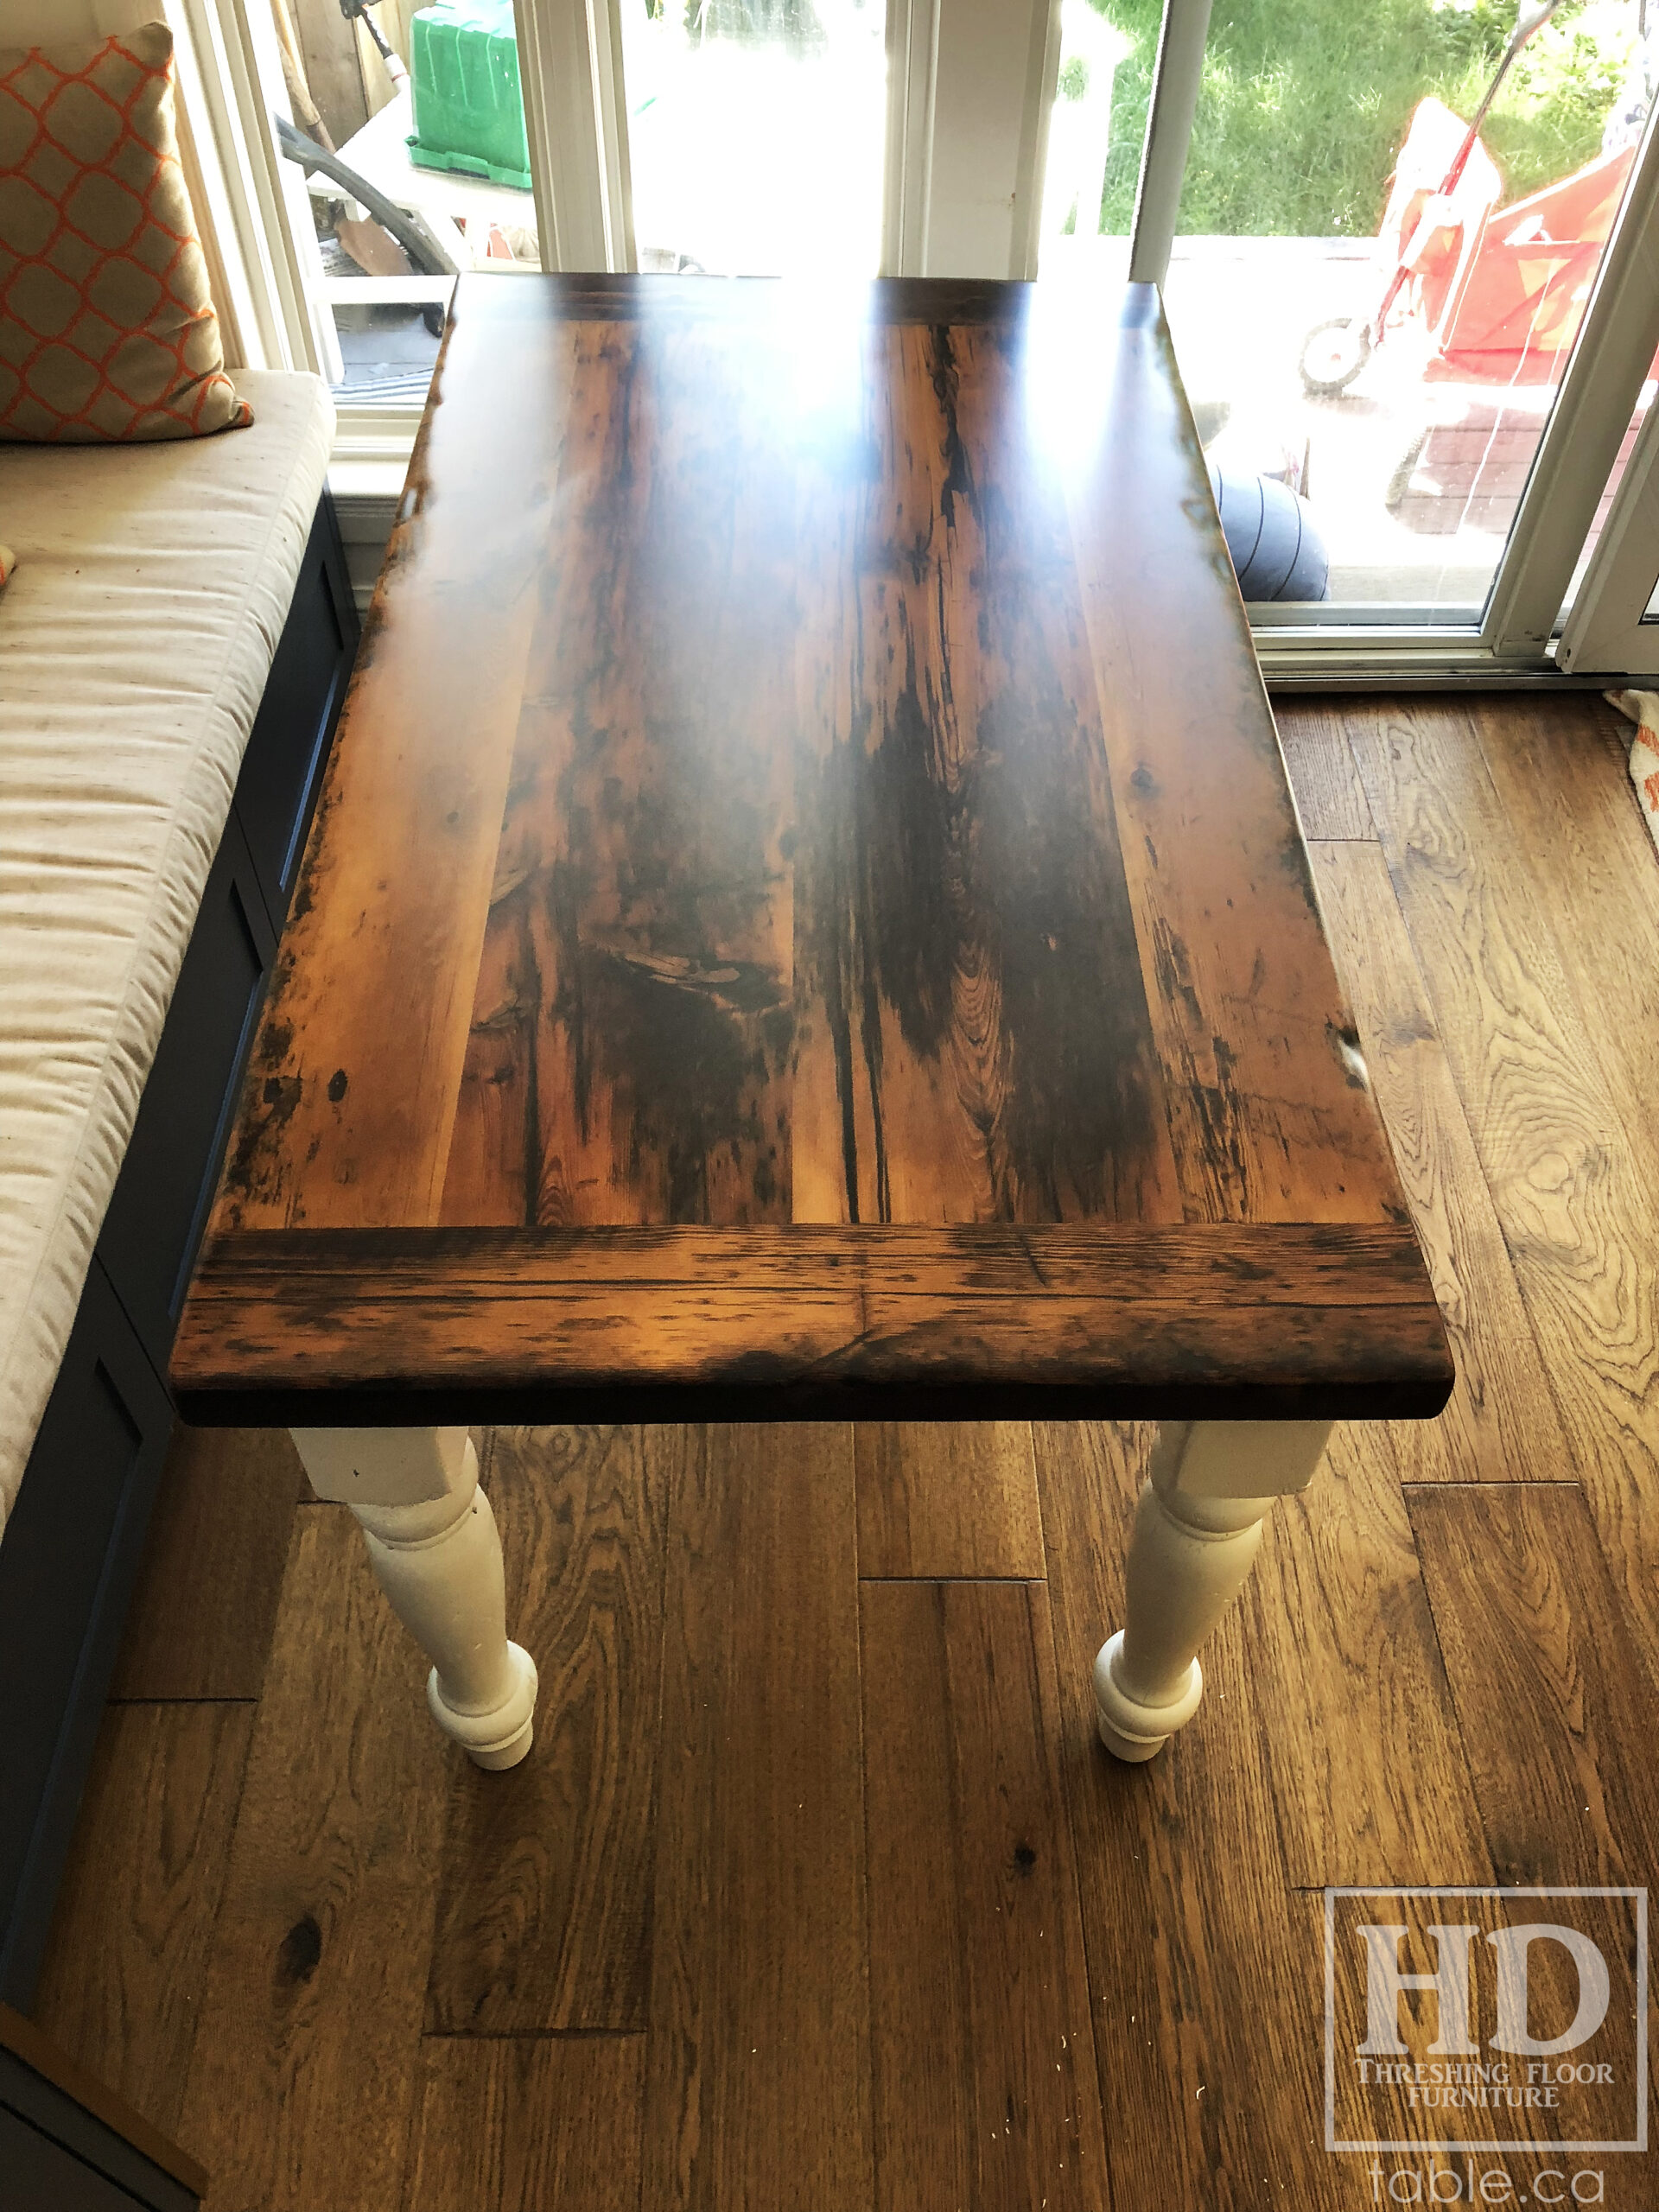 Custom Harvest Table by HD Threshing Floor Furniture / www.table.ca